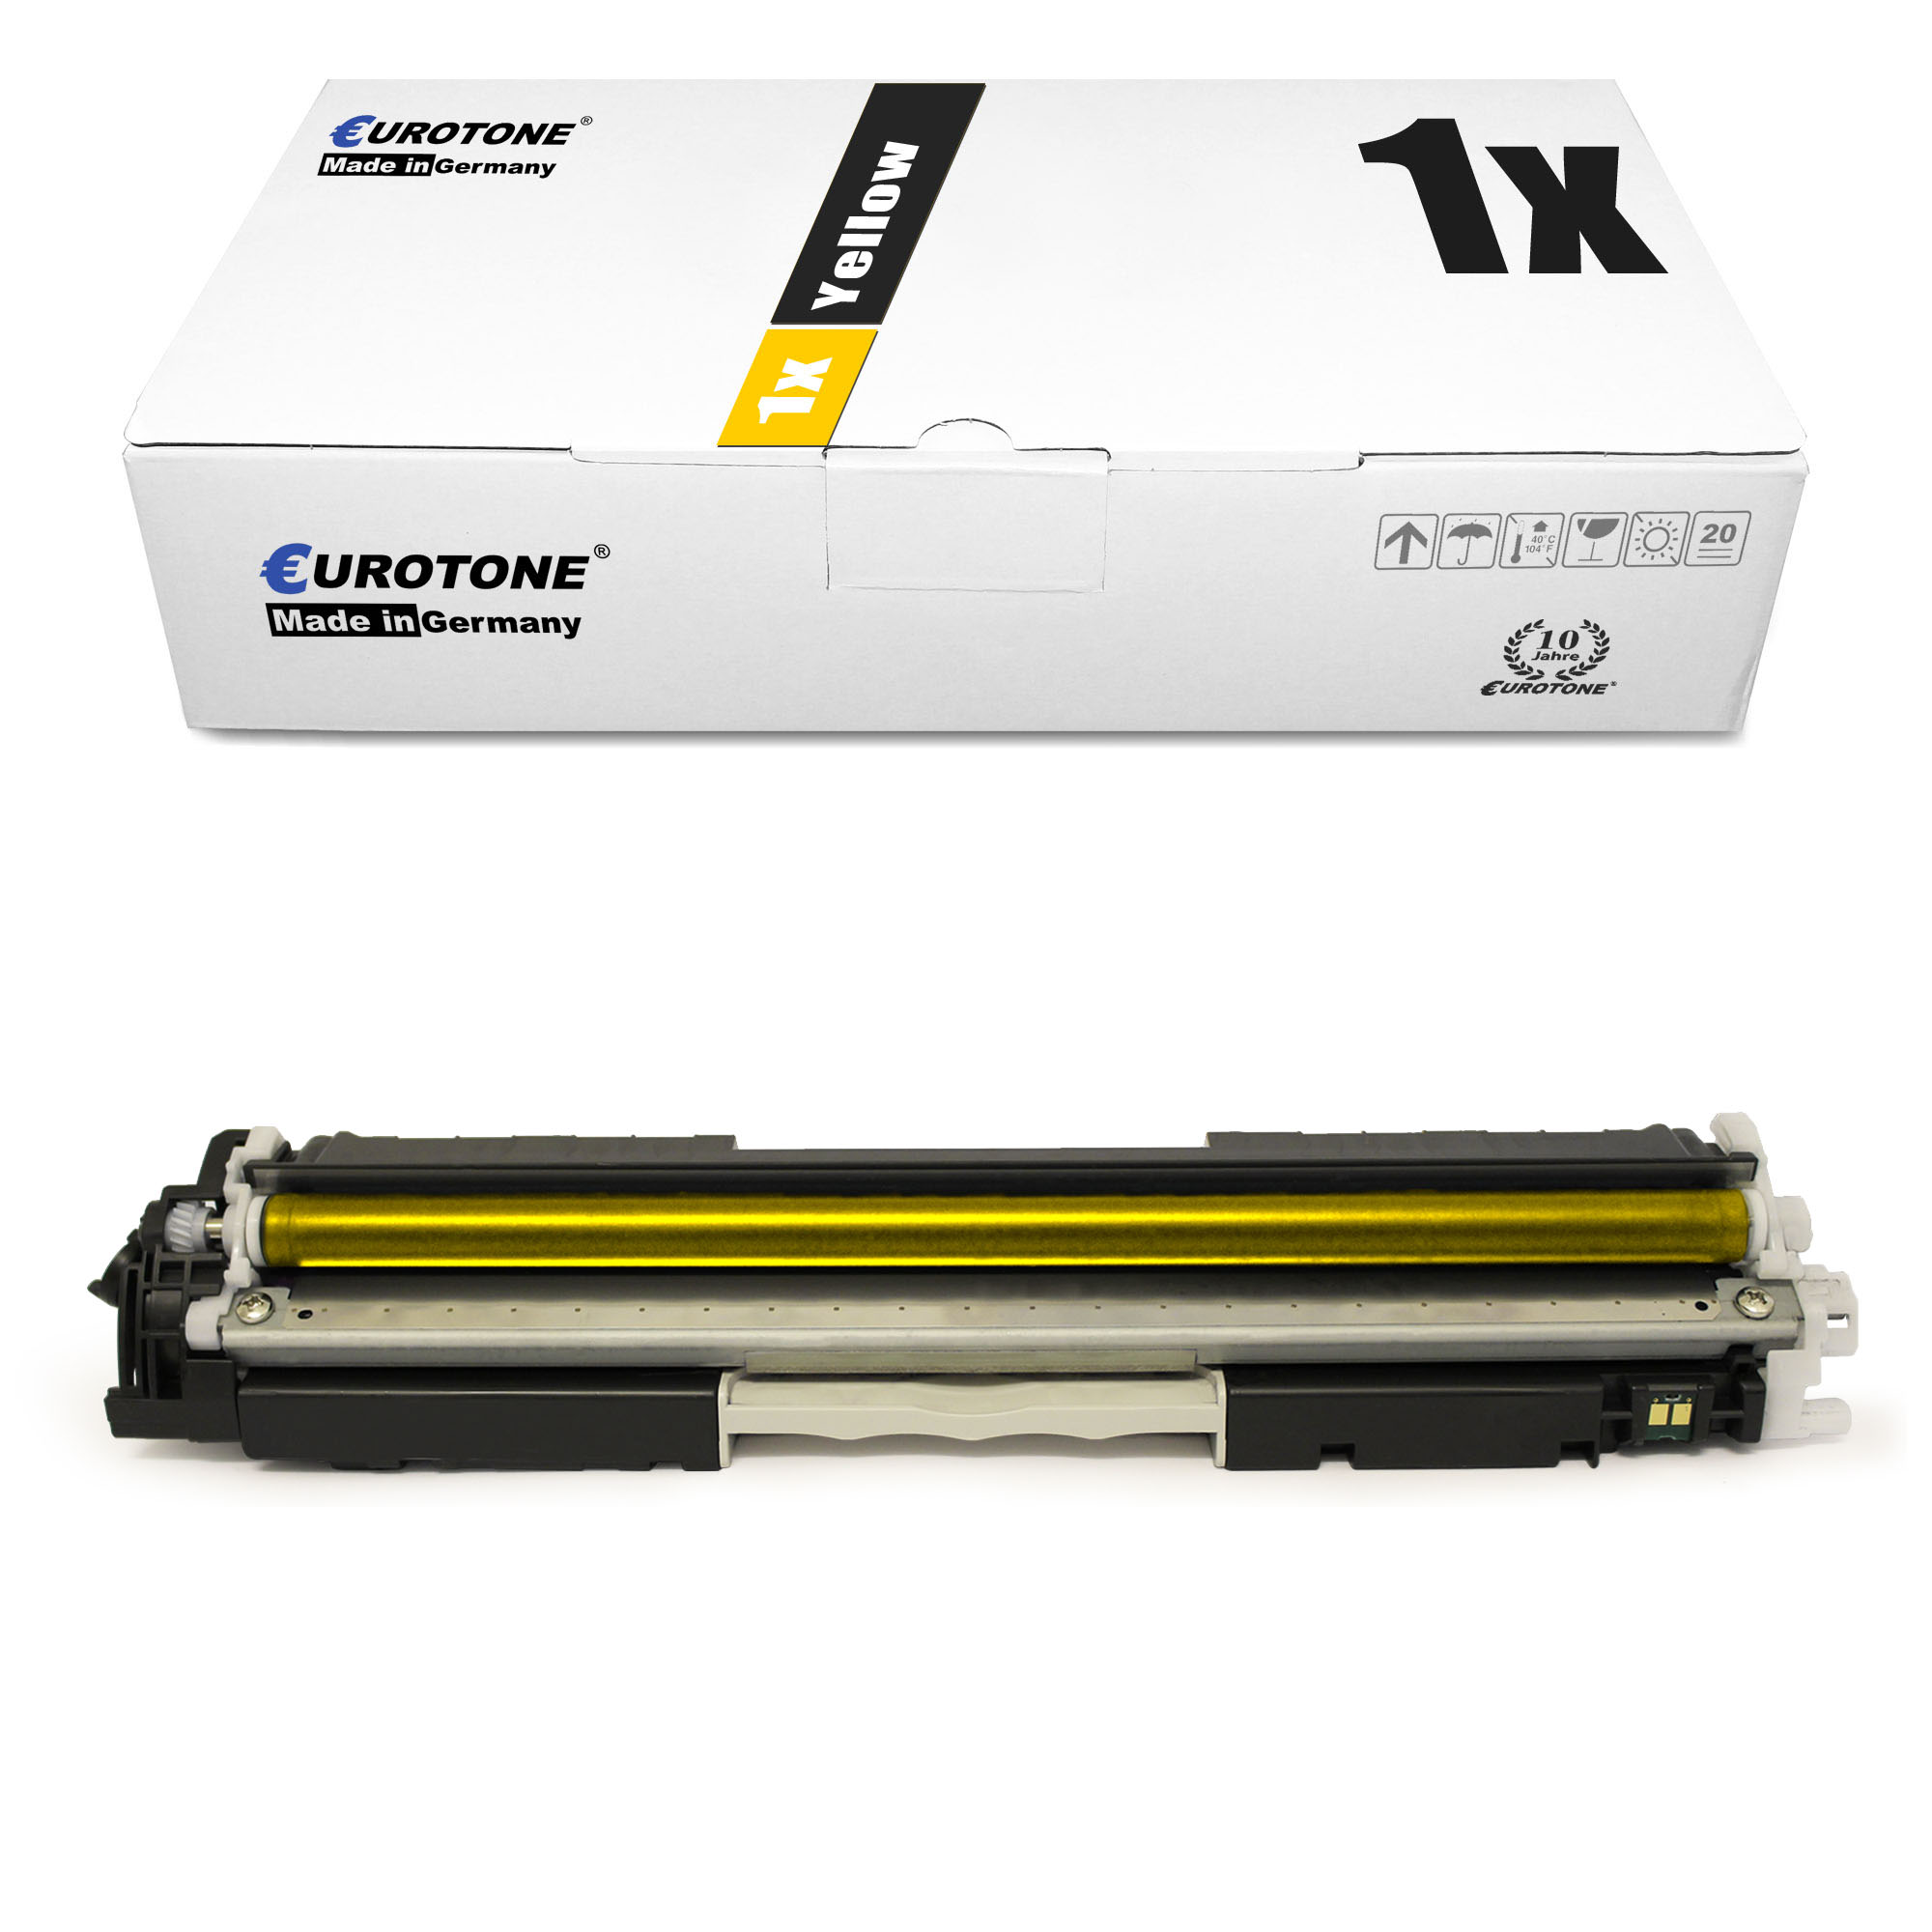 1xY 126A) Yellow Toner / (HP EUROTONE CE312A CP1021 Cartridge